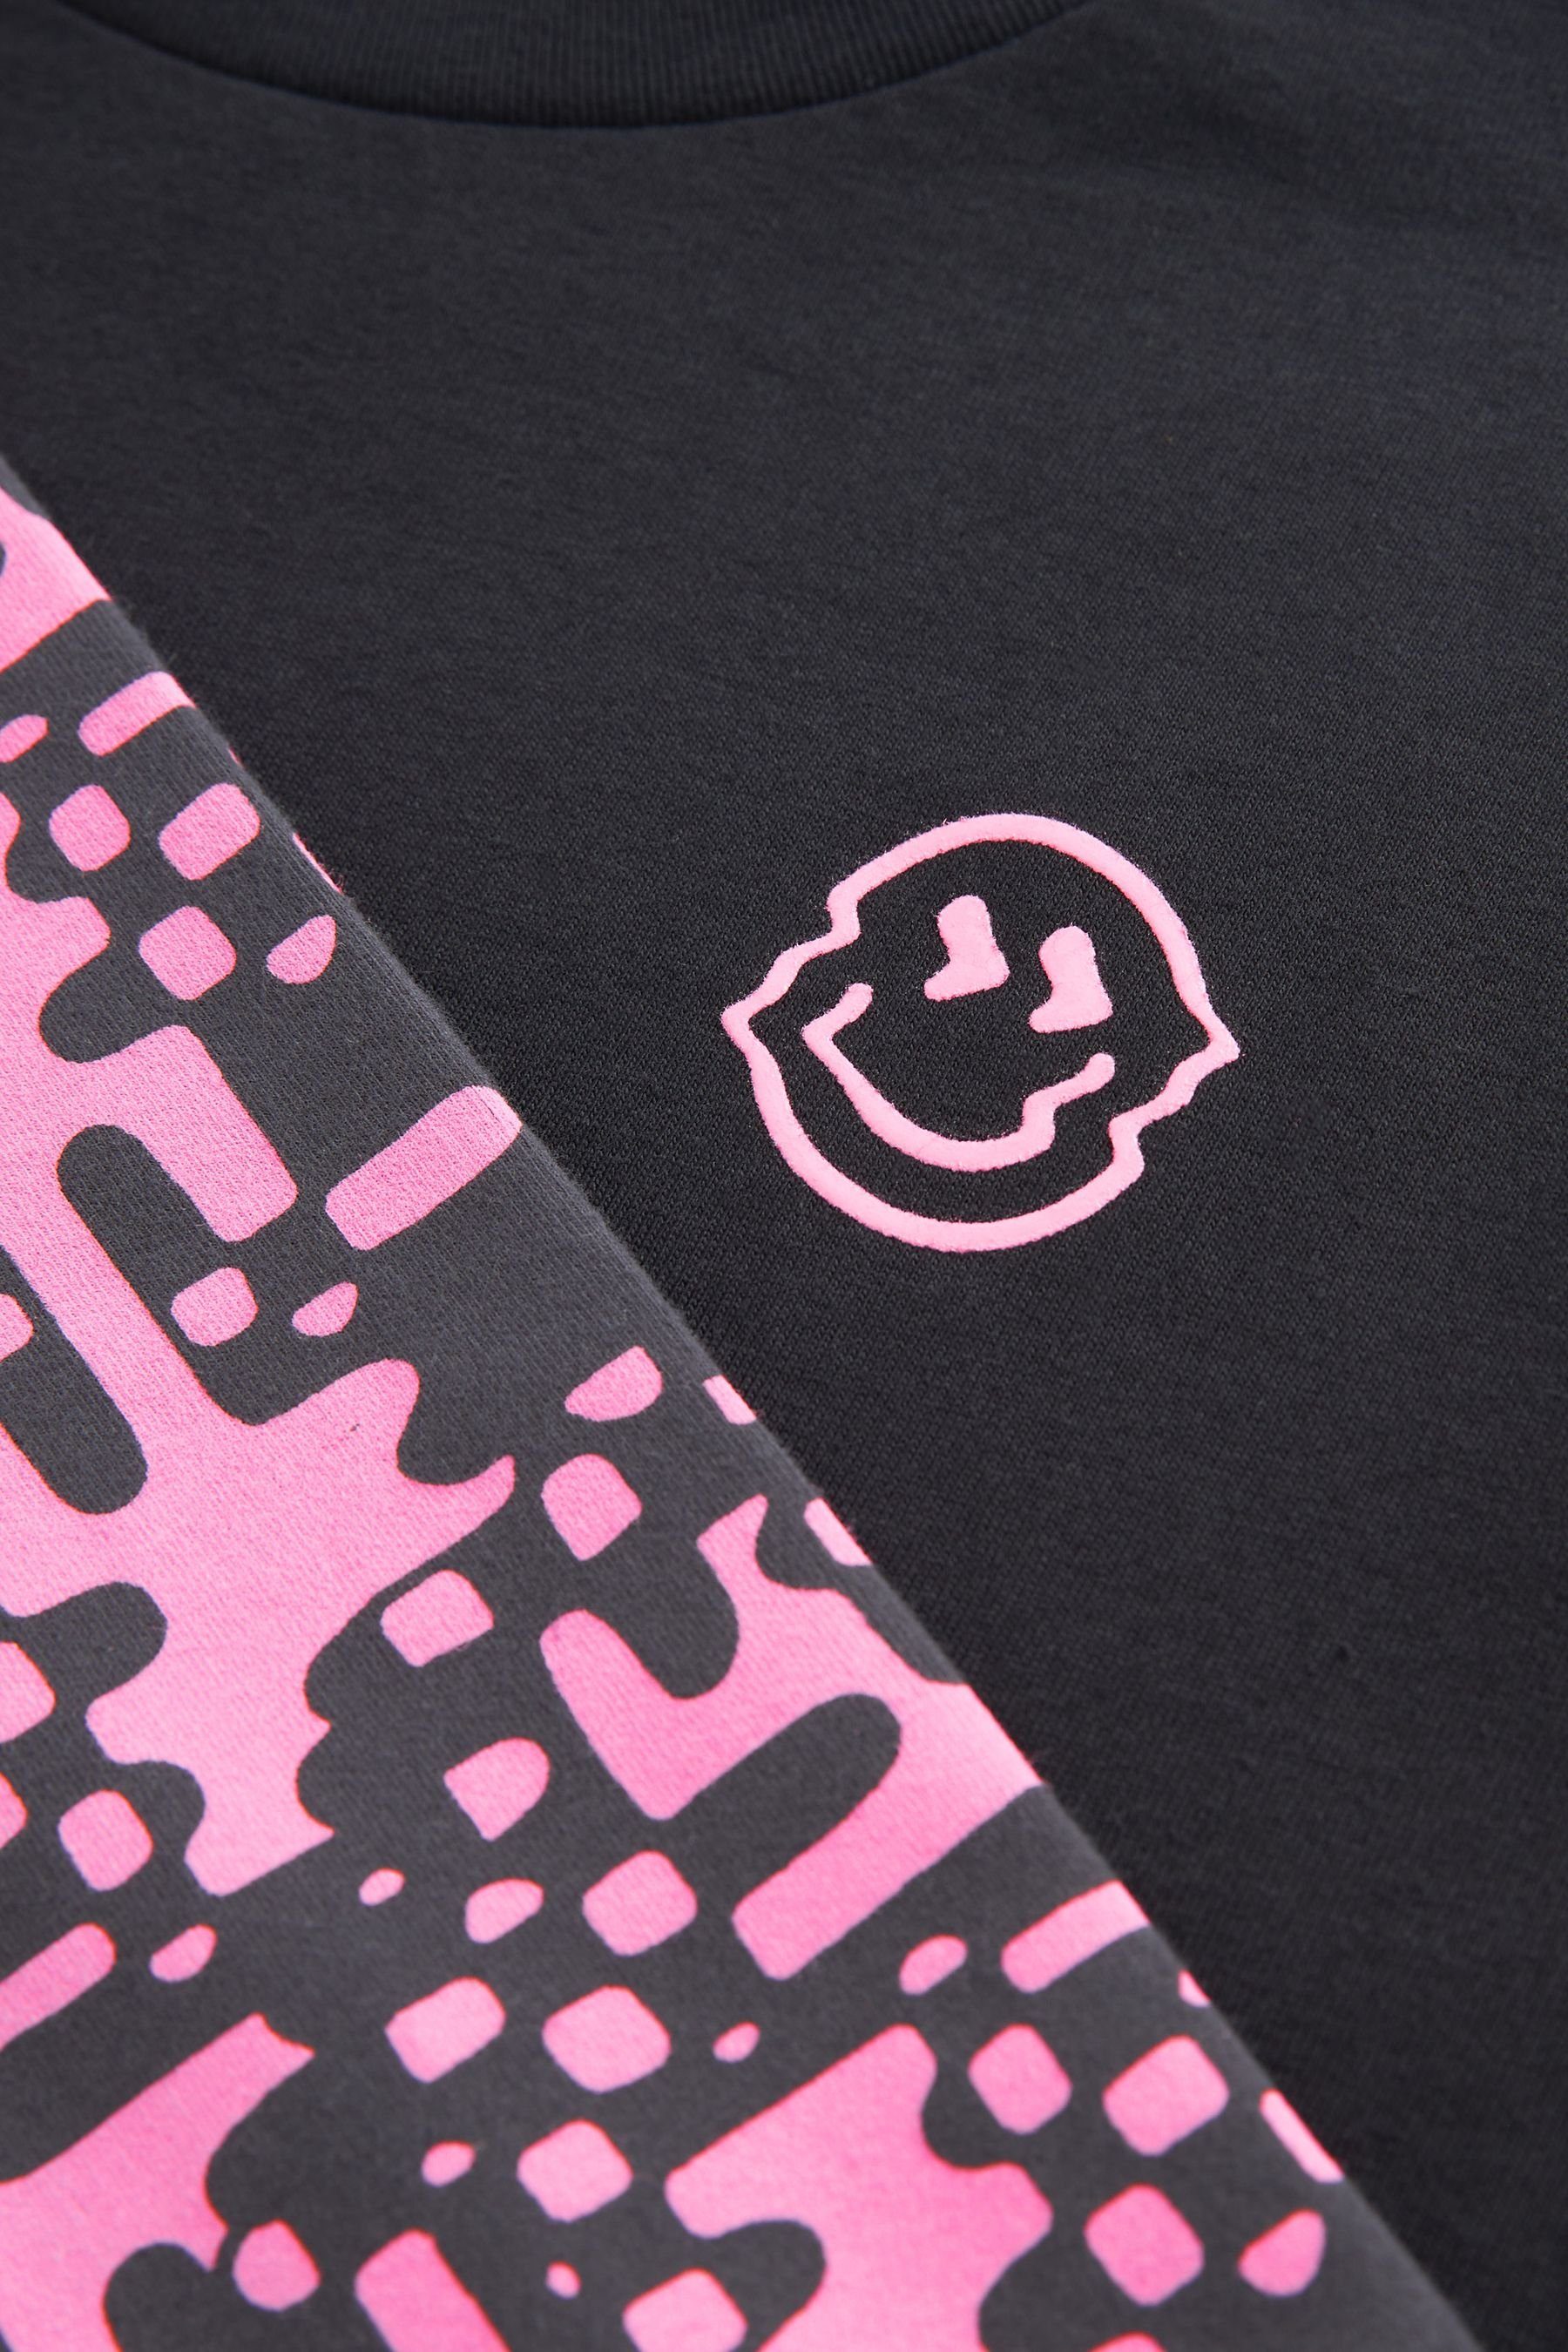 Next T-Shirt Shorts & mit und Radlershorts T-Shirt Glitch/Smile-Print (2-tlg)